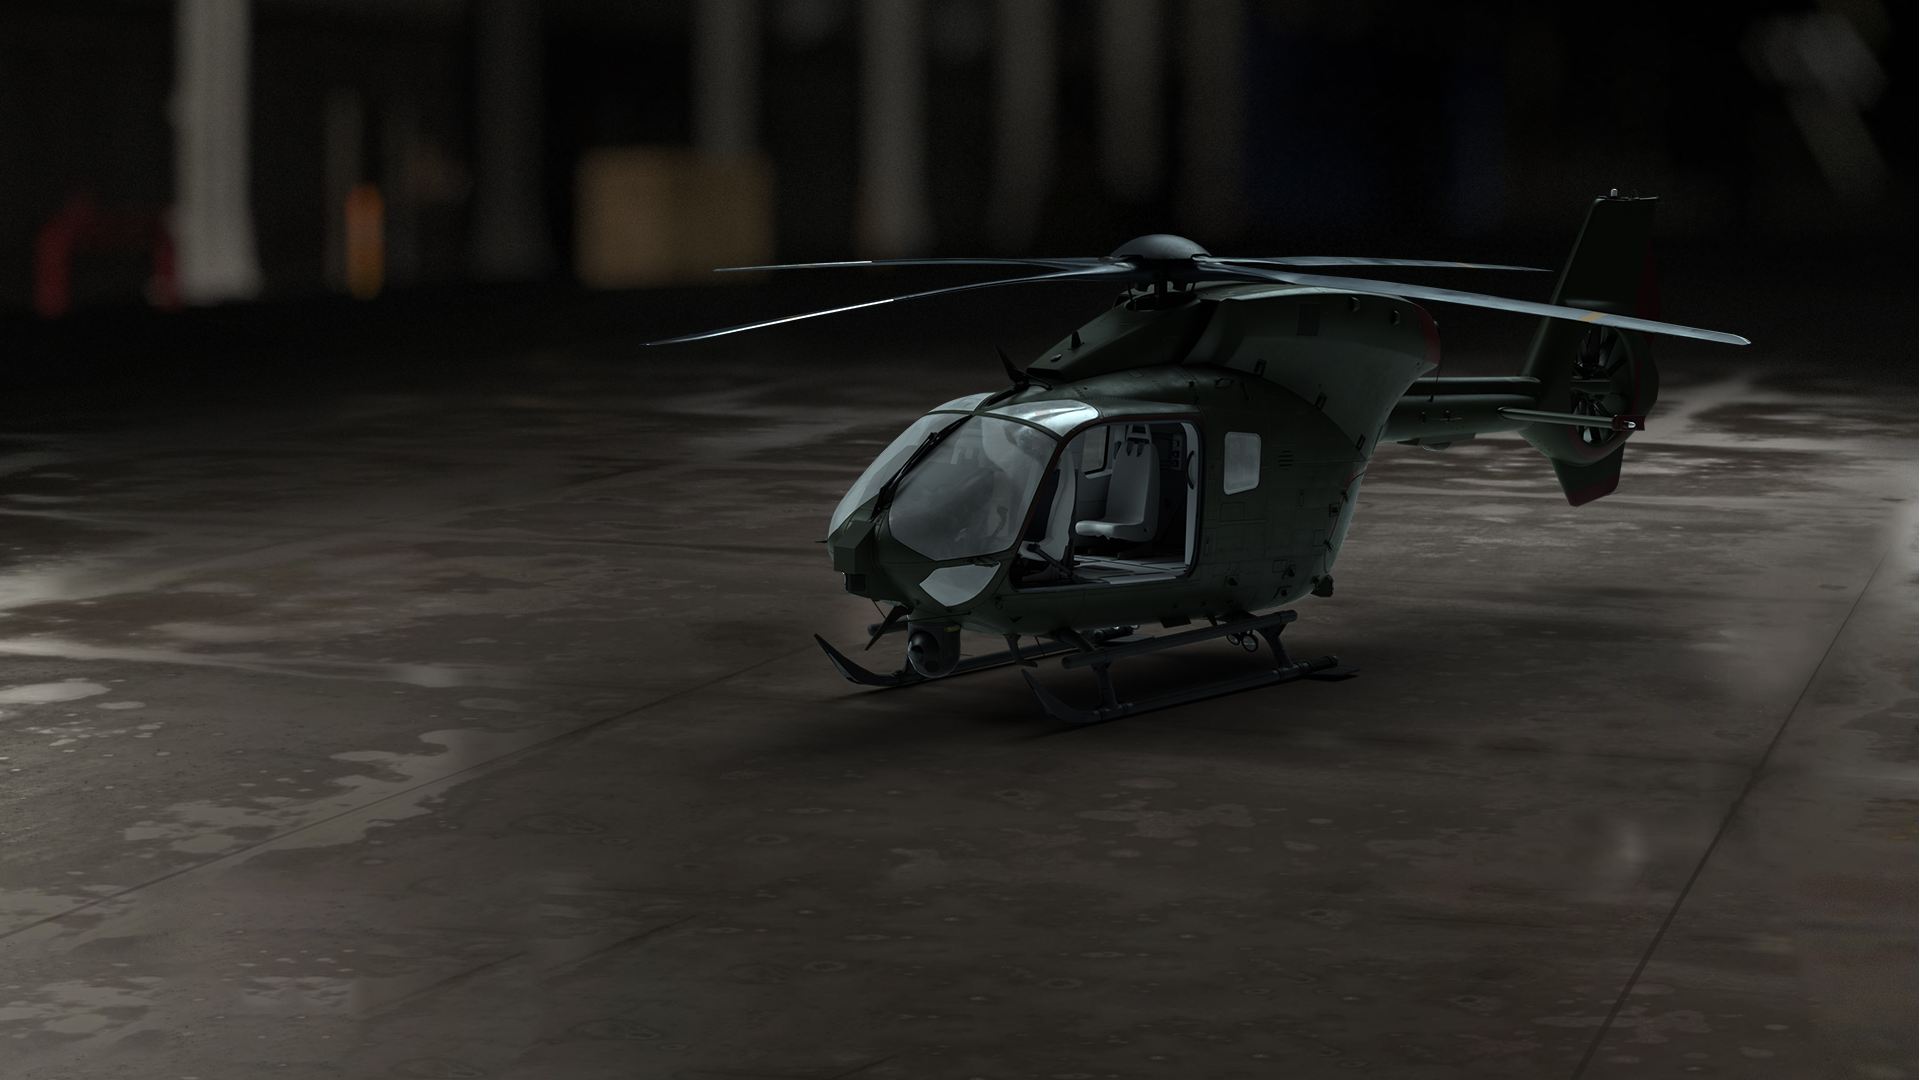 Modern Warfare 2 Vehicles: The Light Halo can be seen